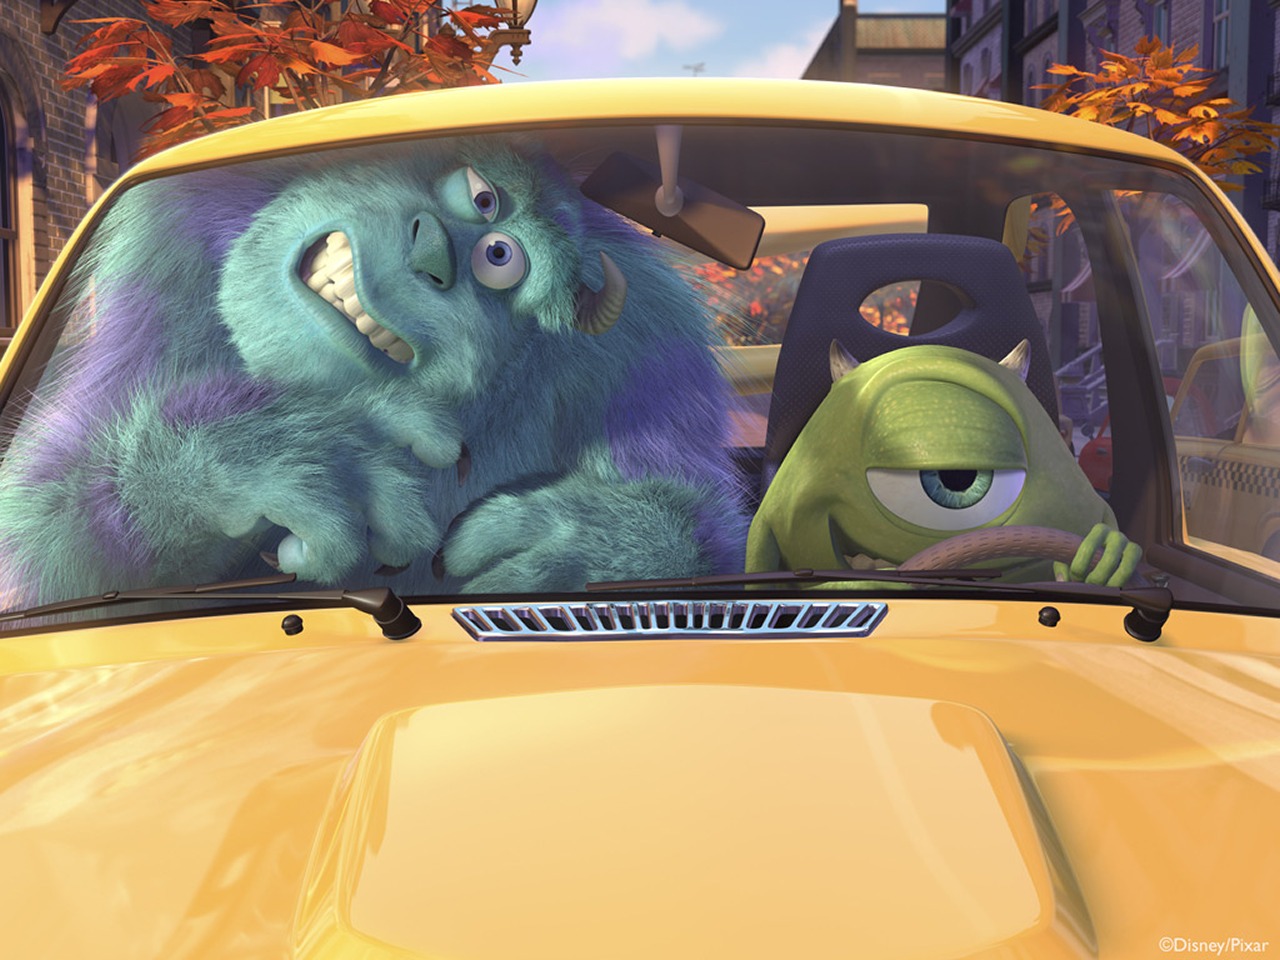 "Mike's New Car" (the Pixar short film included on the "Monsters, Inc." DVD) desktop wallpaper (1280 x 960 pixels)